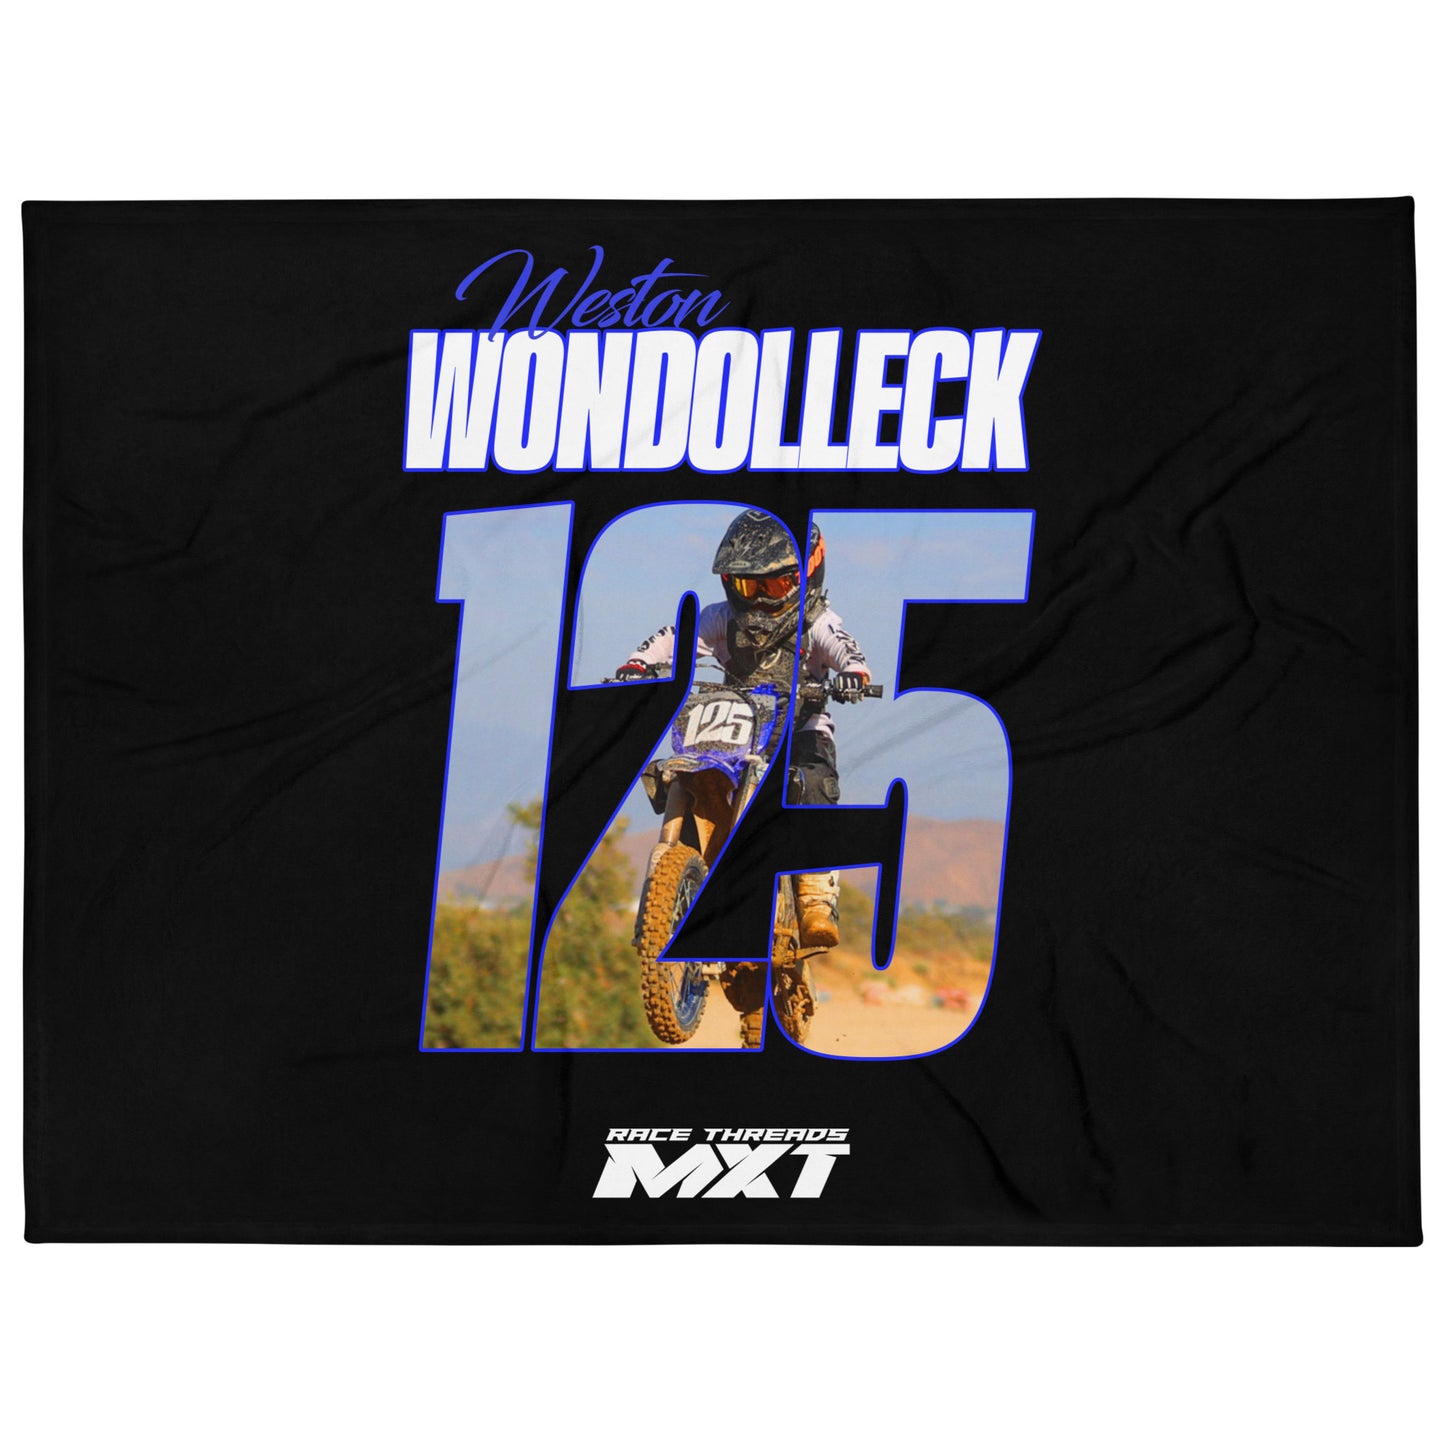 Weston Wondolleck 125 60" x 80" Throw Blanket